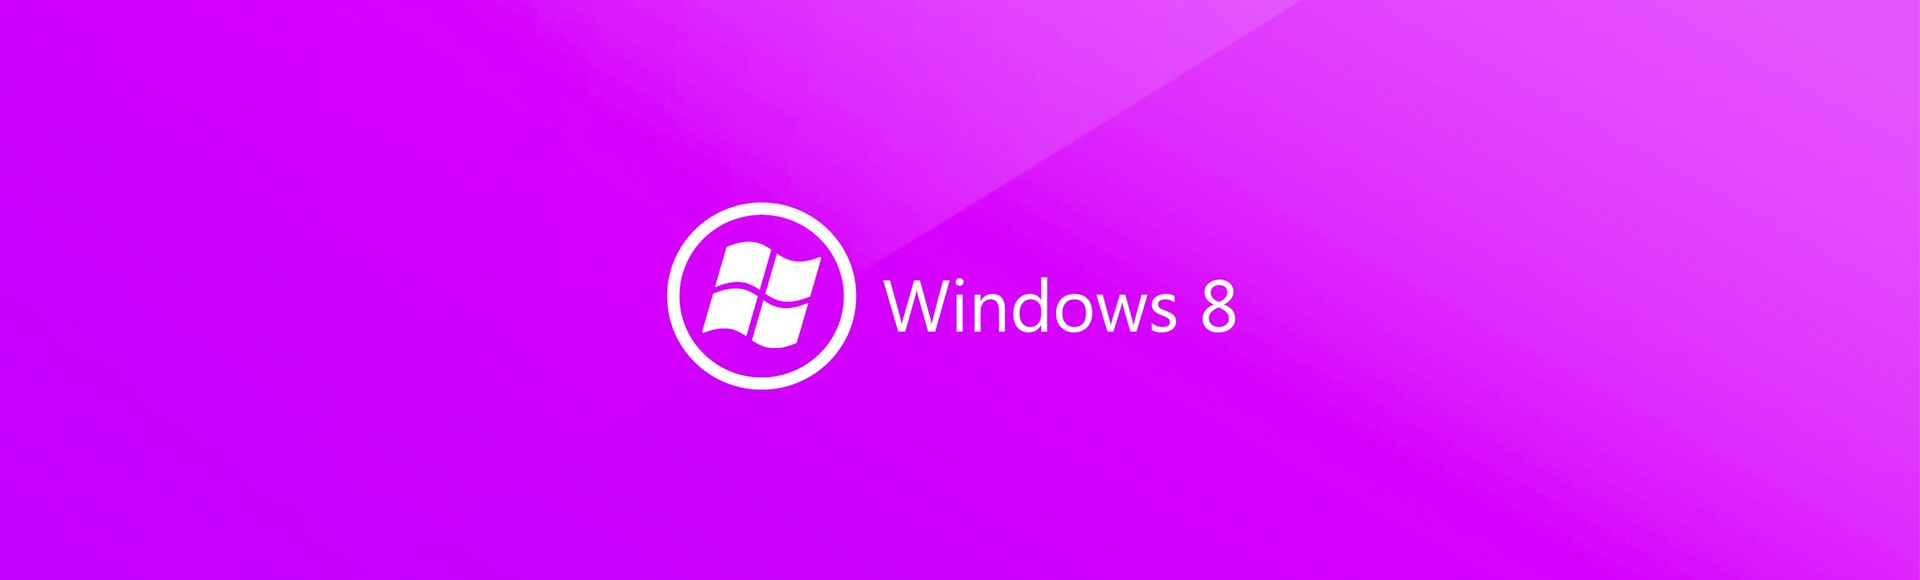 Configuration de Windows 8